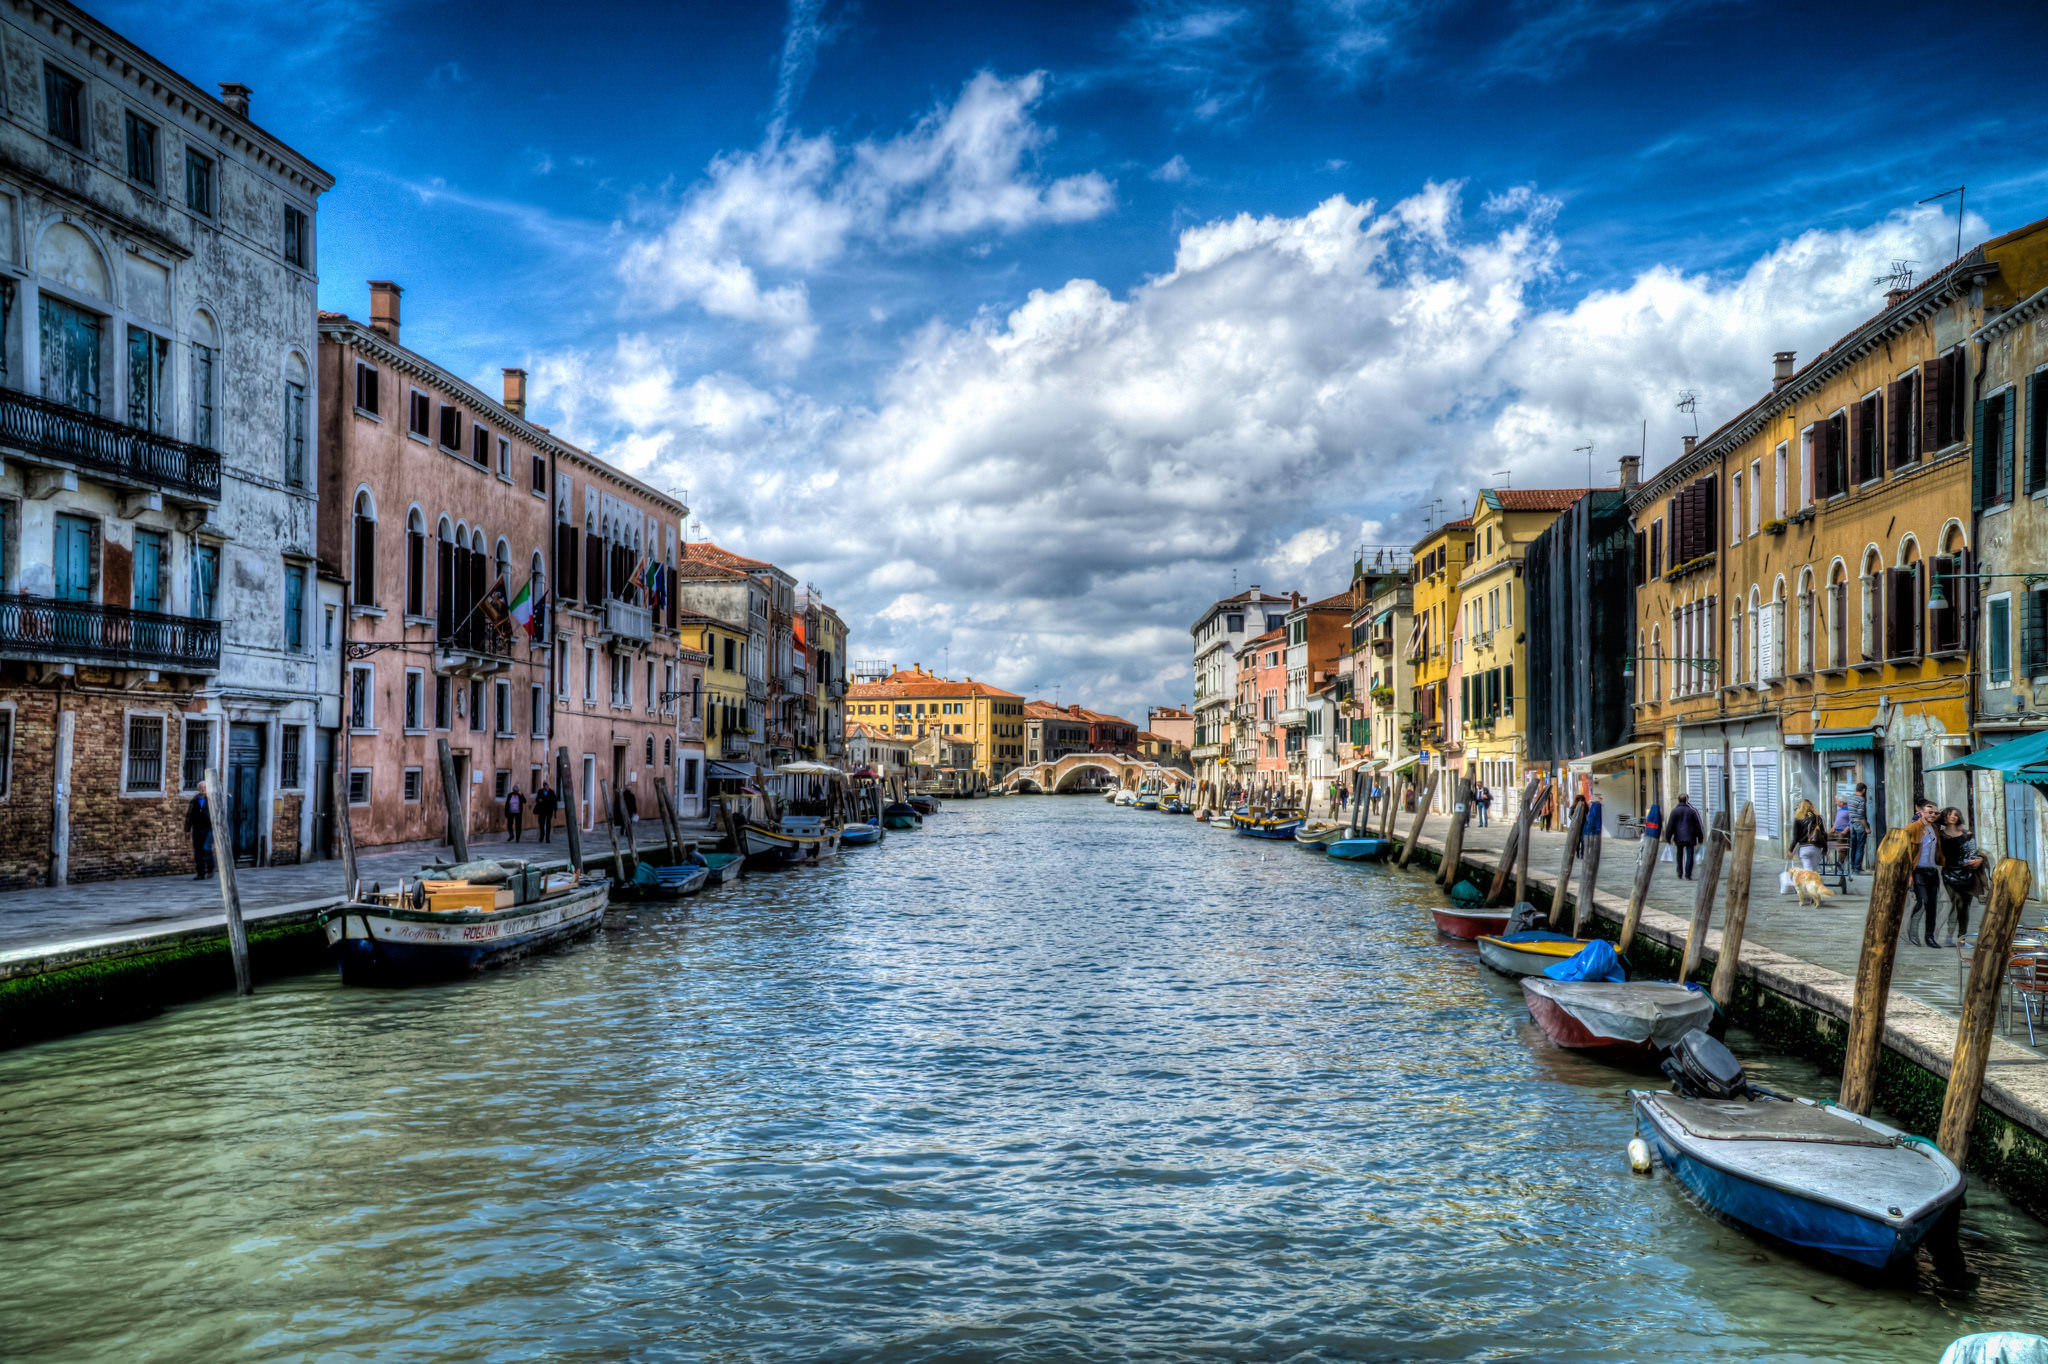 Фото бесплатно Венеция, Италия, Гранд канал, город, Европа